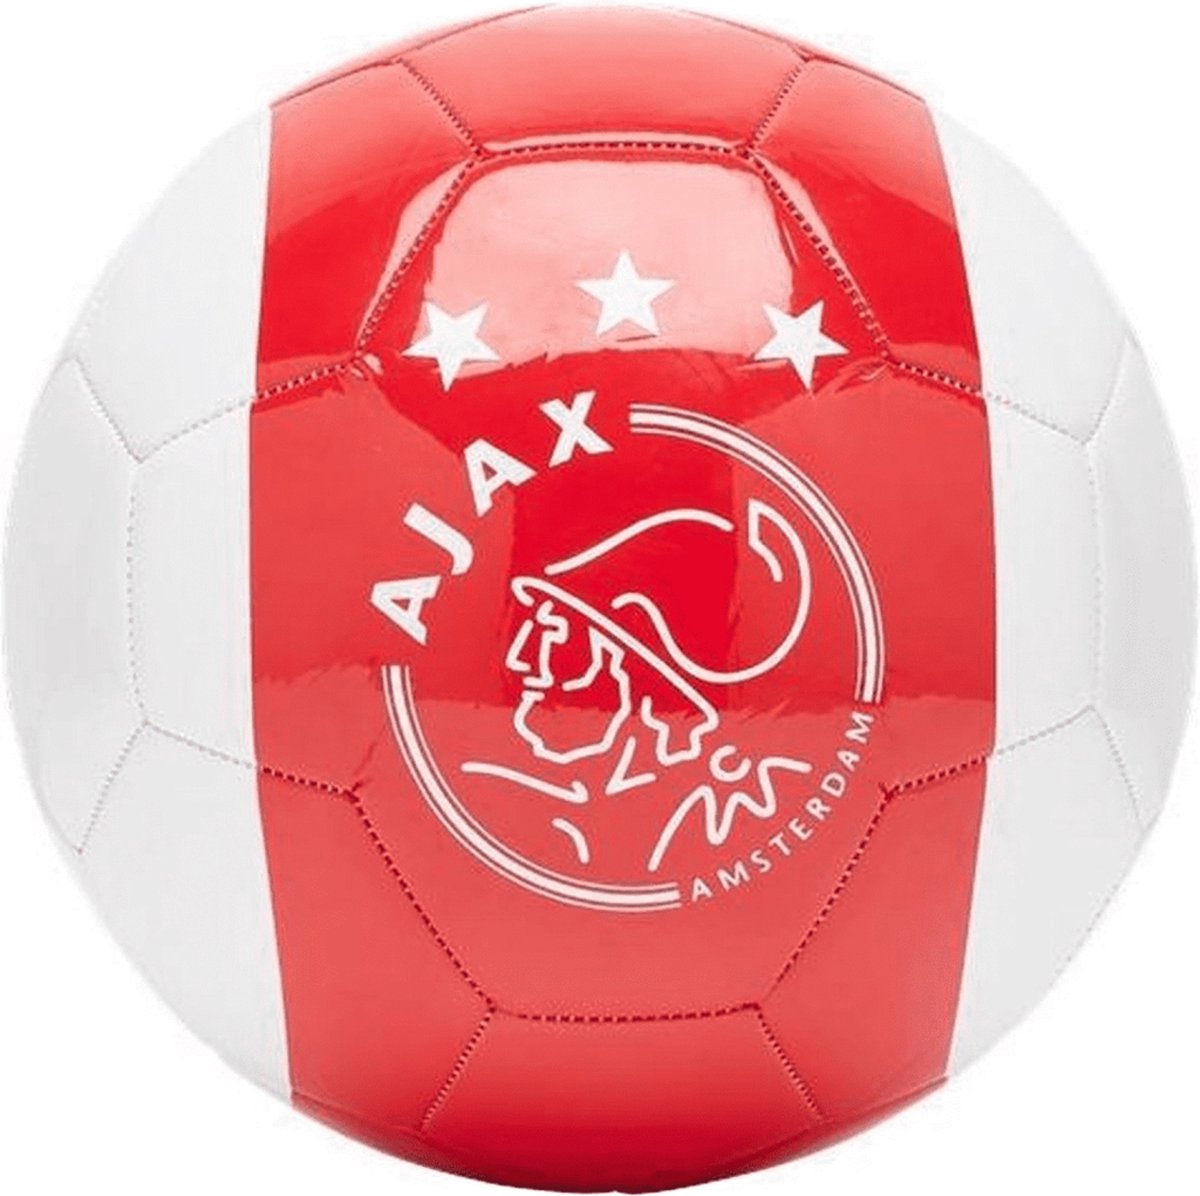 Ajax-bal wit-rood-wit met kruizen - Ajax